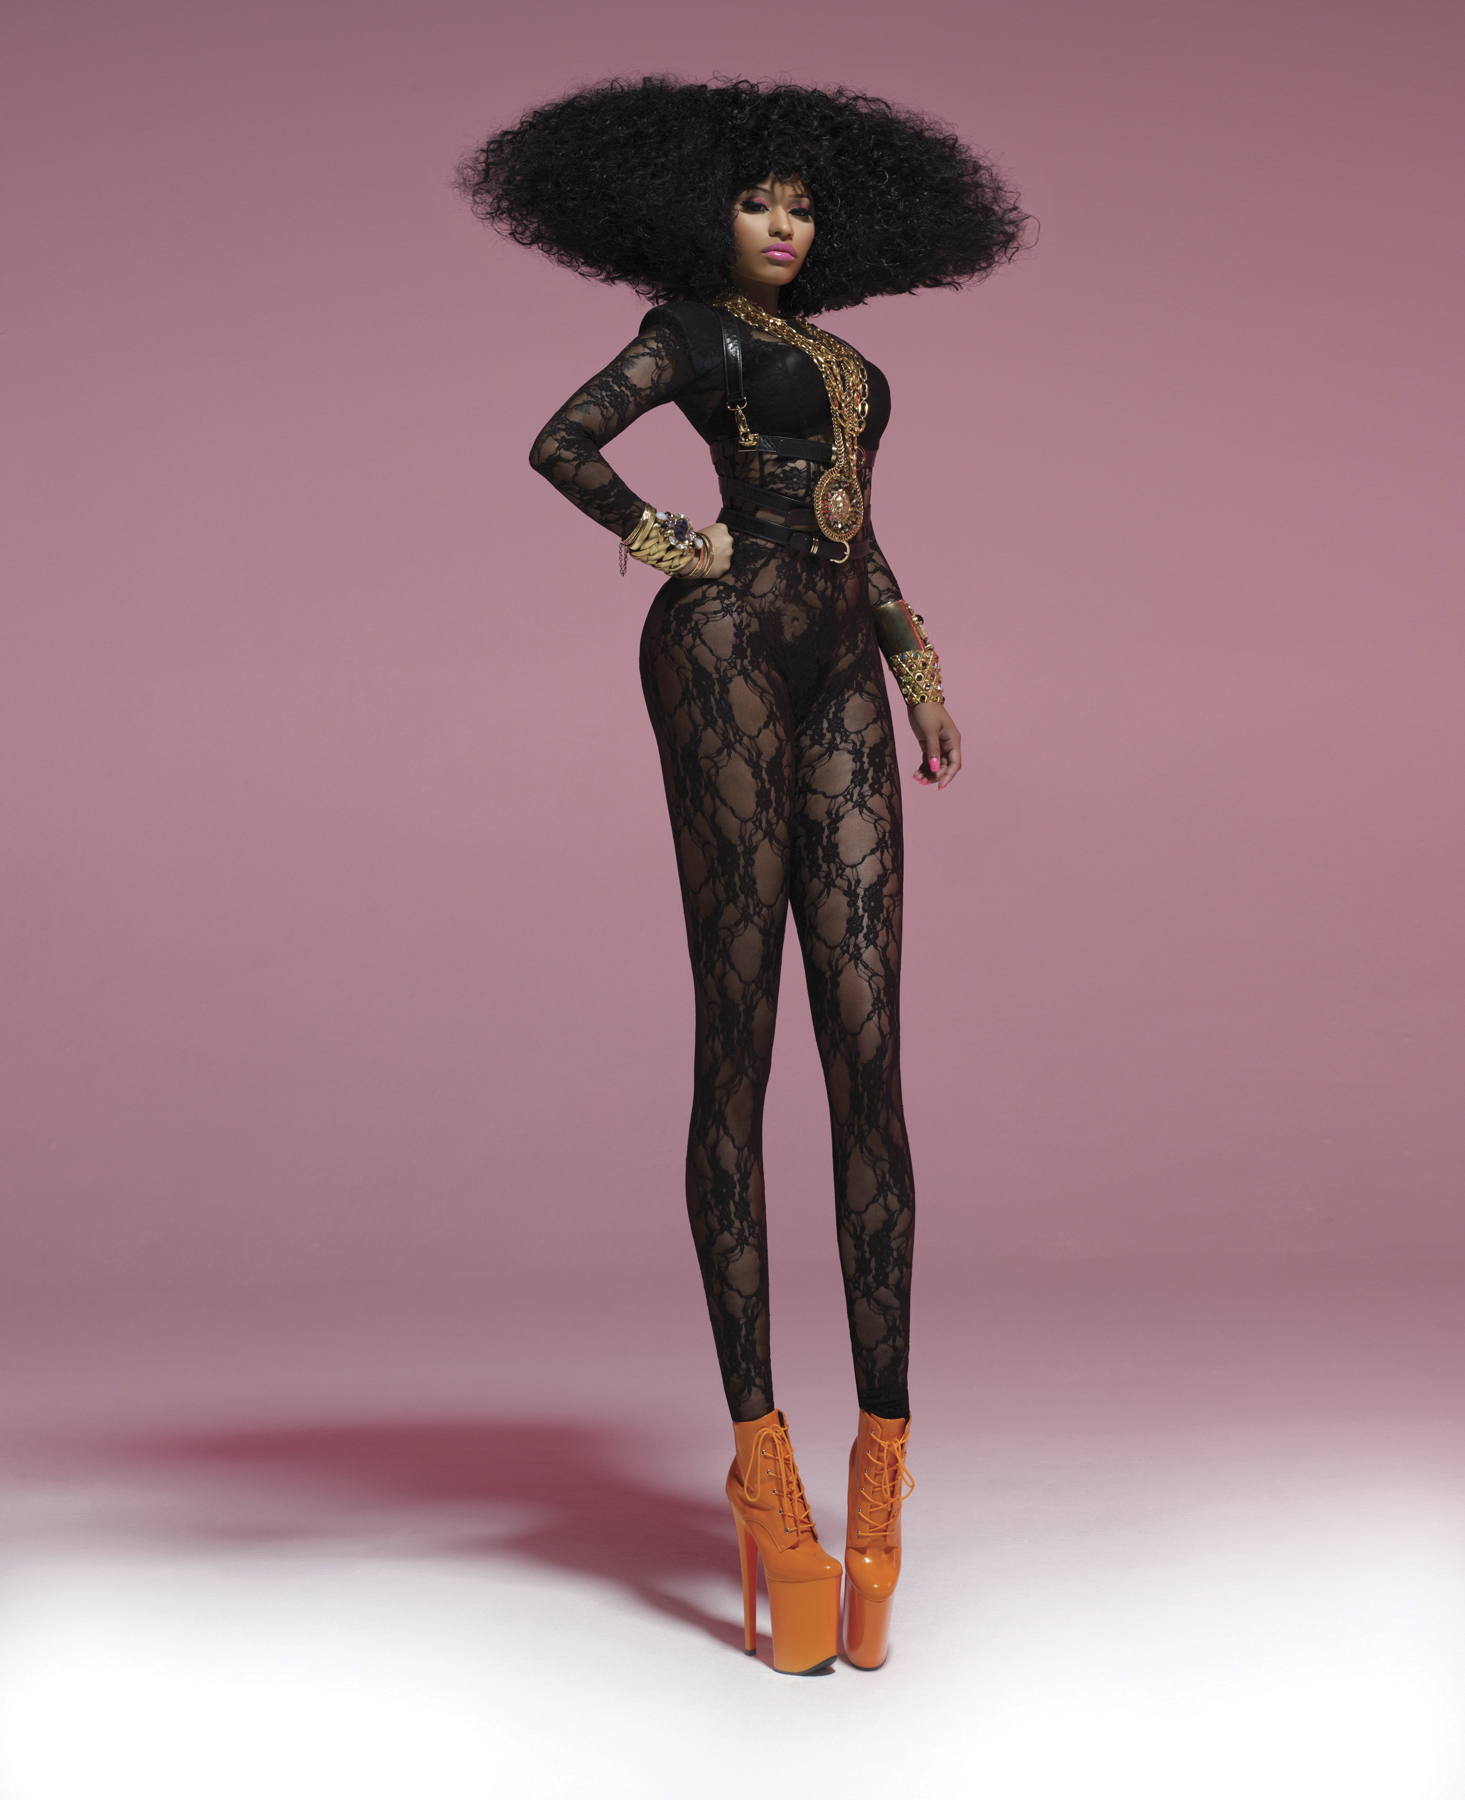 Nicki Minaj photo 53 of 314 pics, wallpaper - photo #472059 - ThePlace2